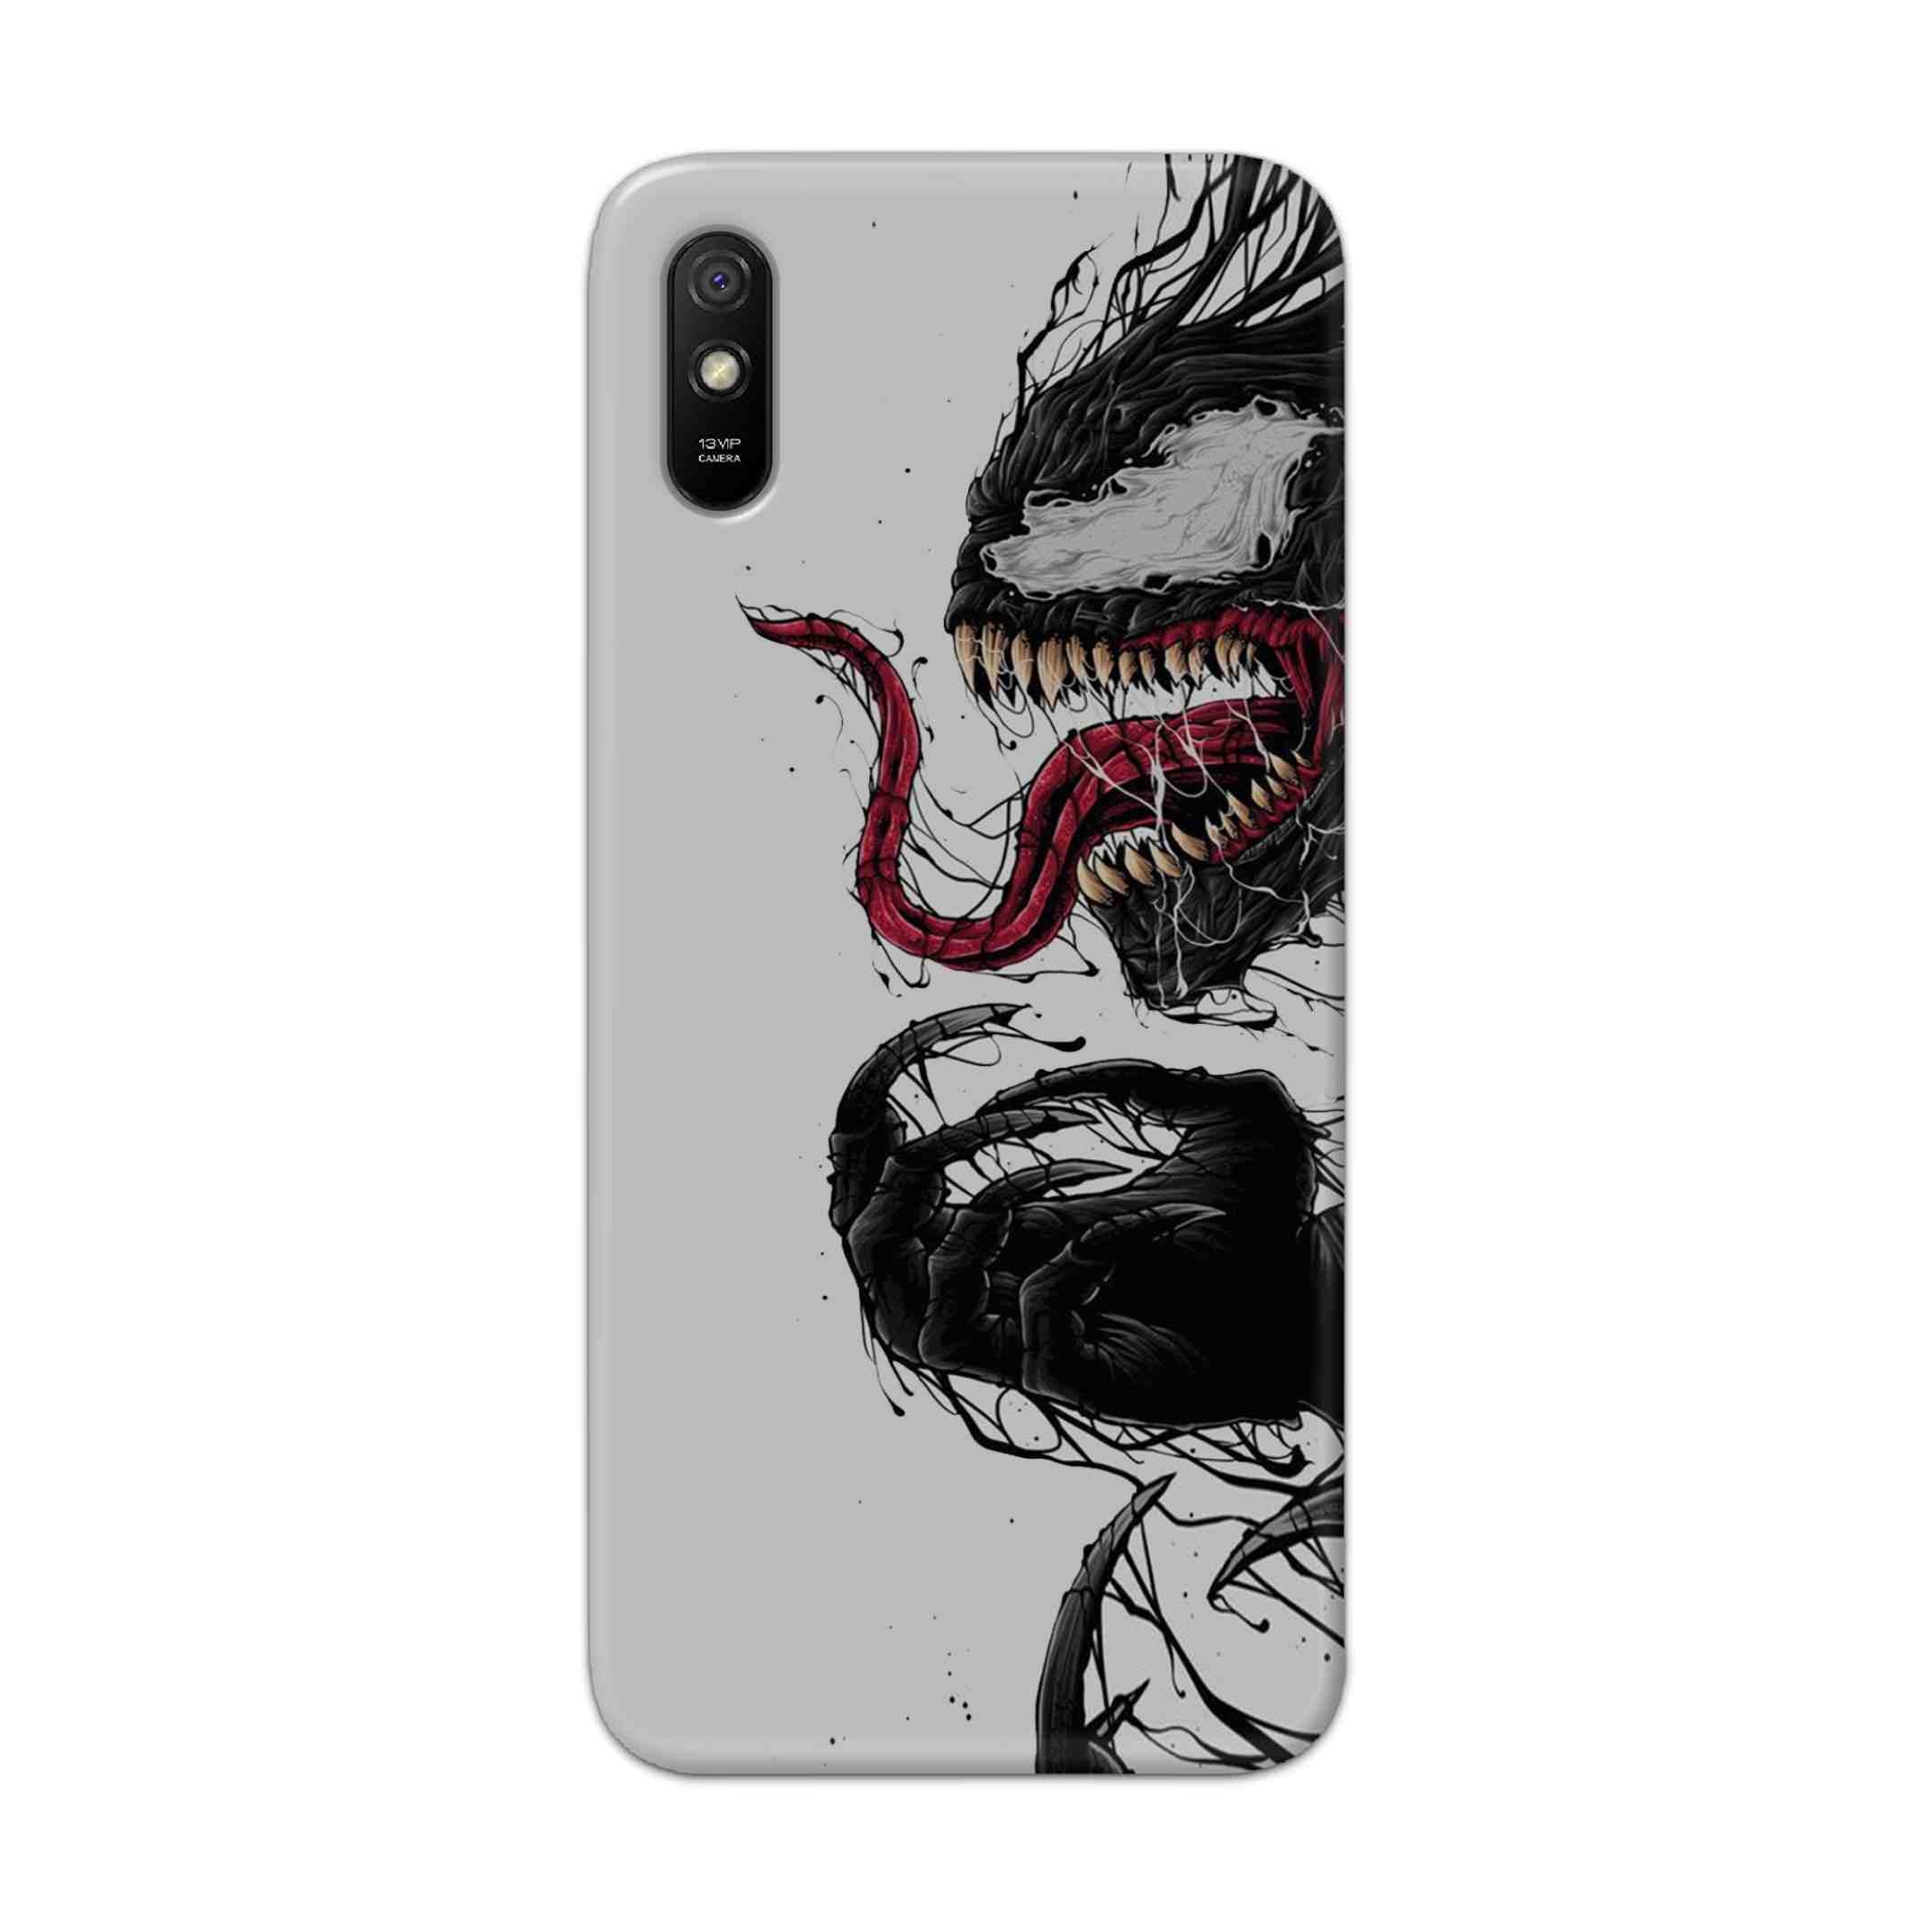 Buy Venom Crazy Hard Back Mobile Phone Case Cover For Redmi 9A Online